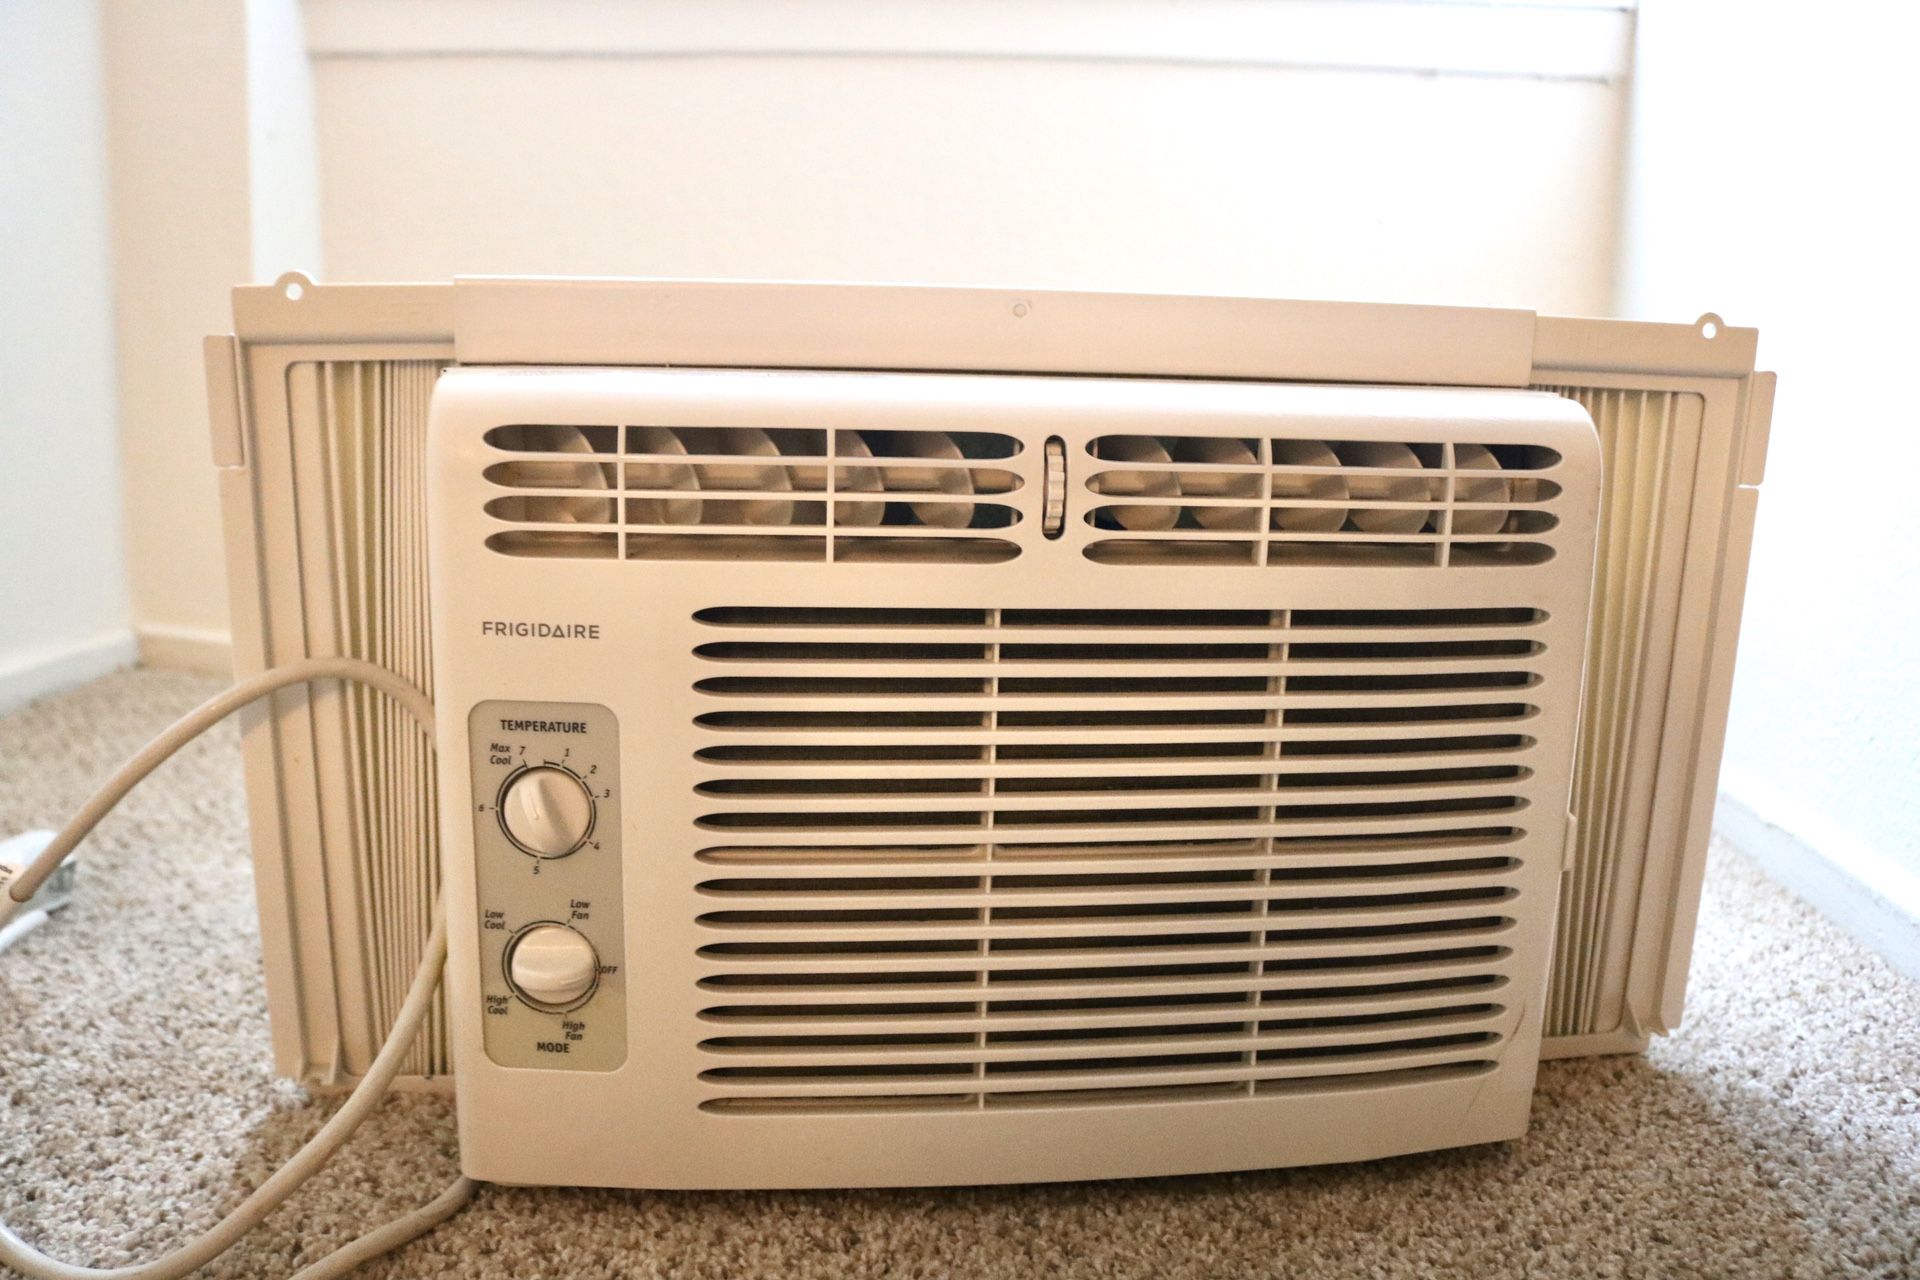 Frigidaire air conditioner for SALE!